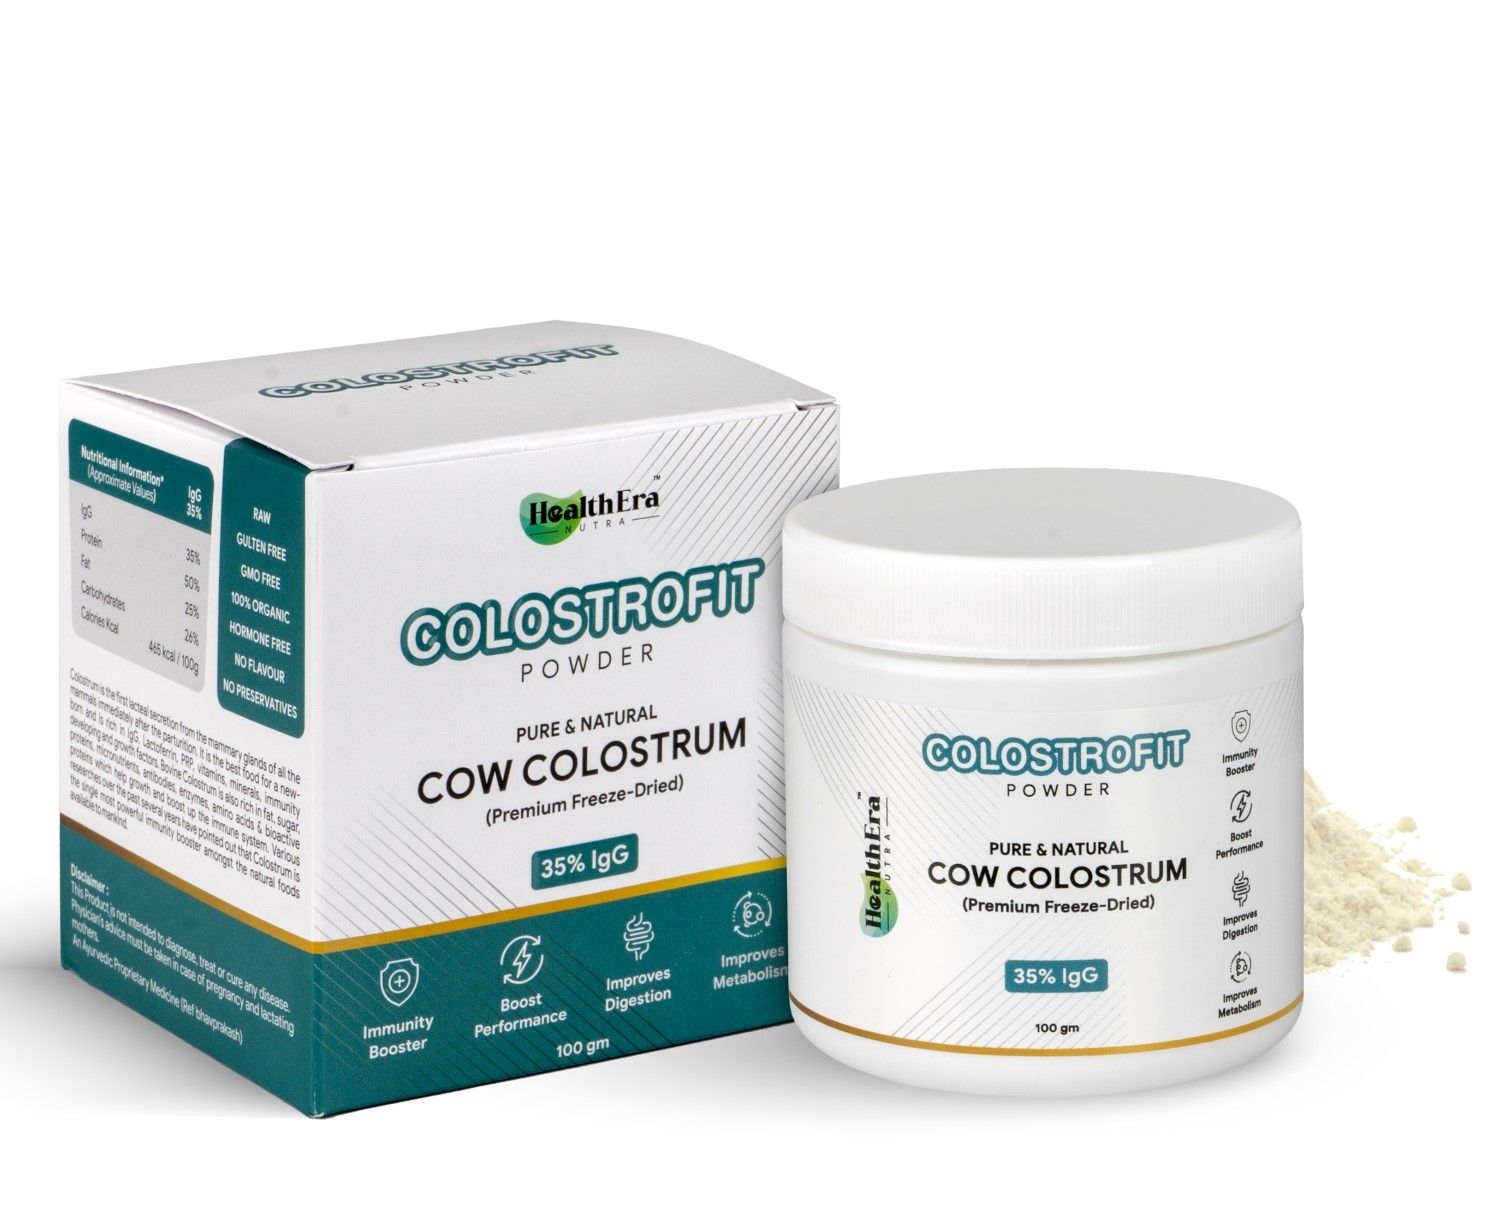 COLOSTROFIT Cow Colostrum Powder